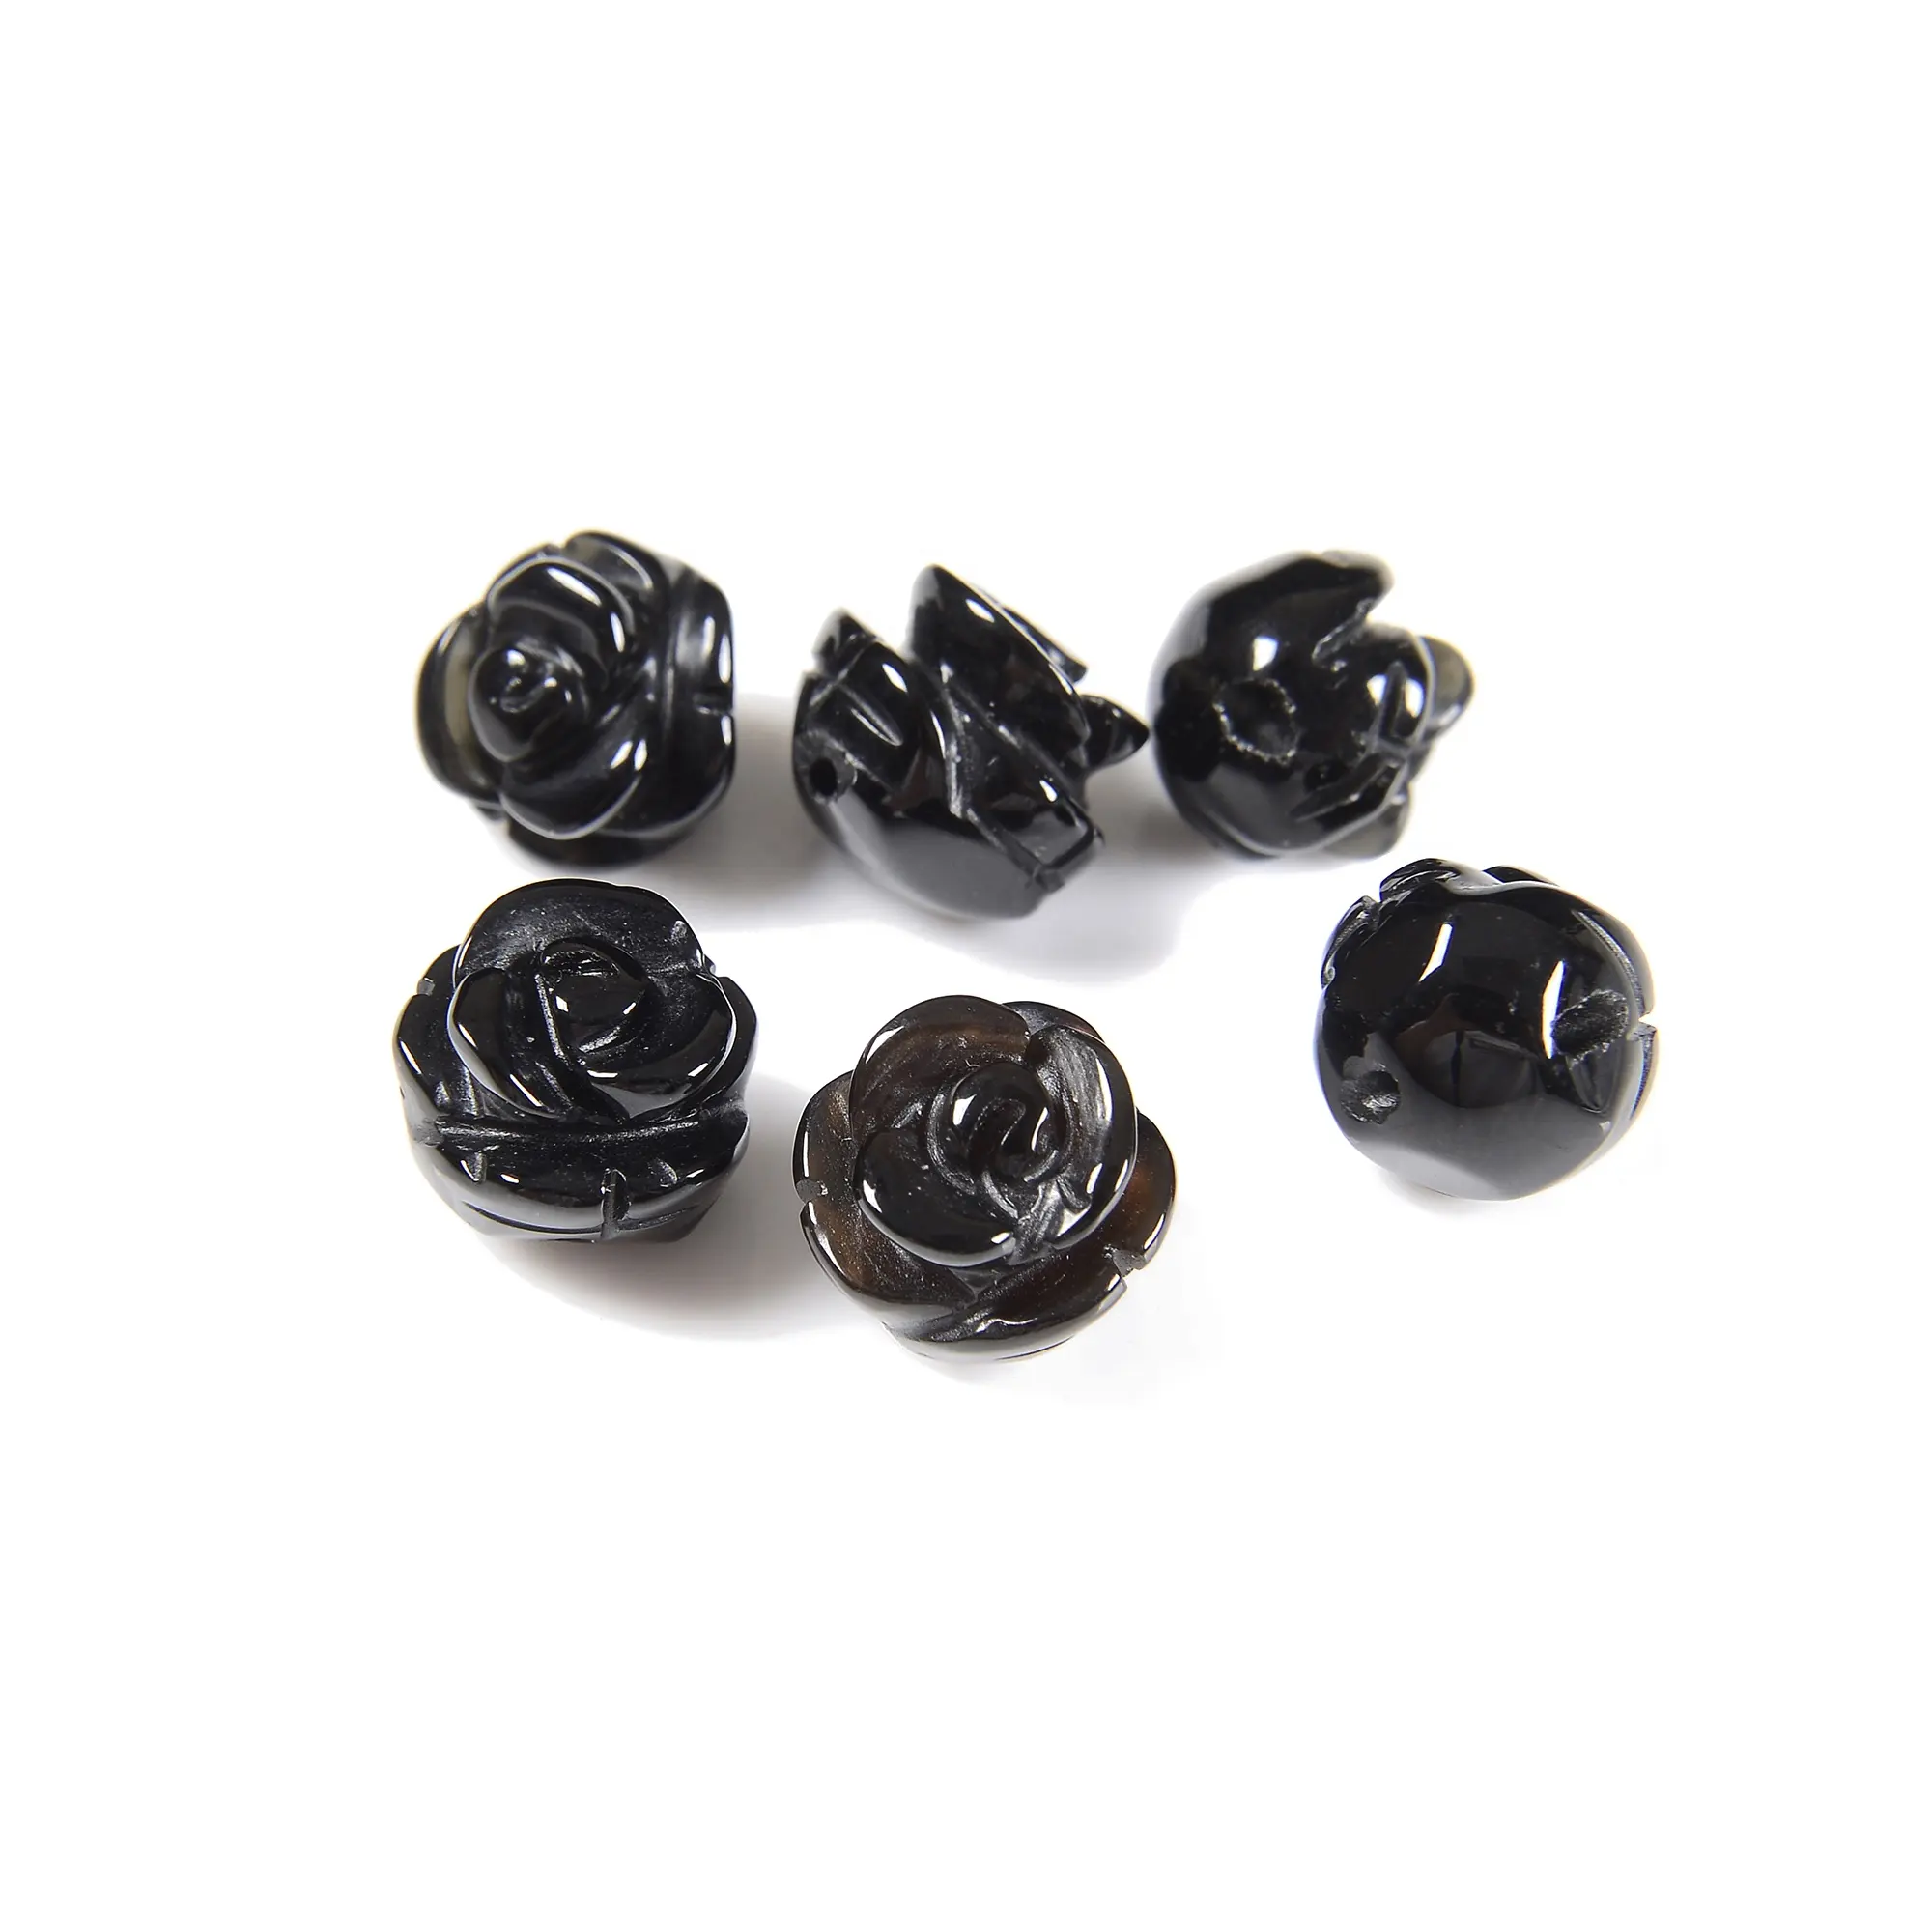 Doğal 10mm oyma gül çiçek siyah oniks takı kolye yapımı taş boncuk satılan çanta başına 6 adet